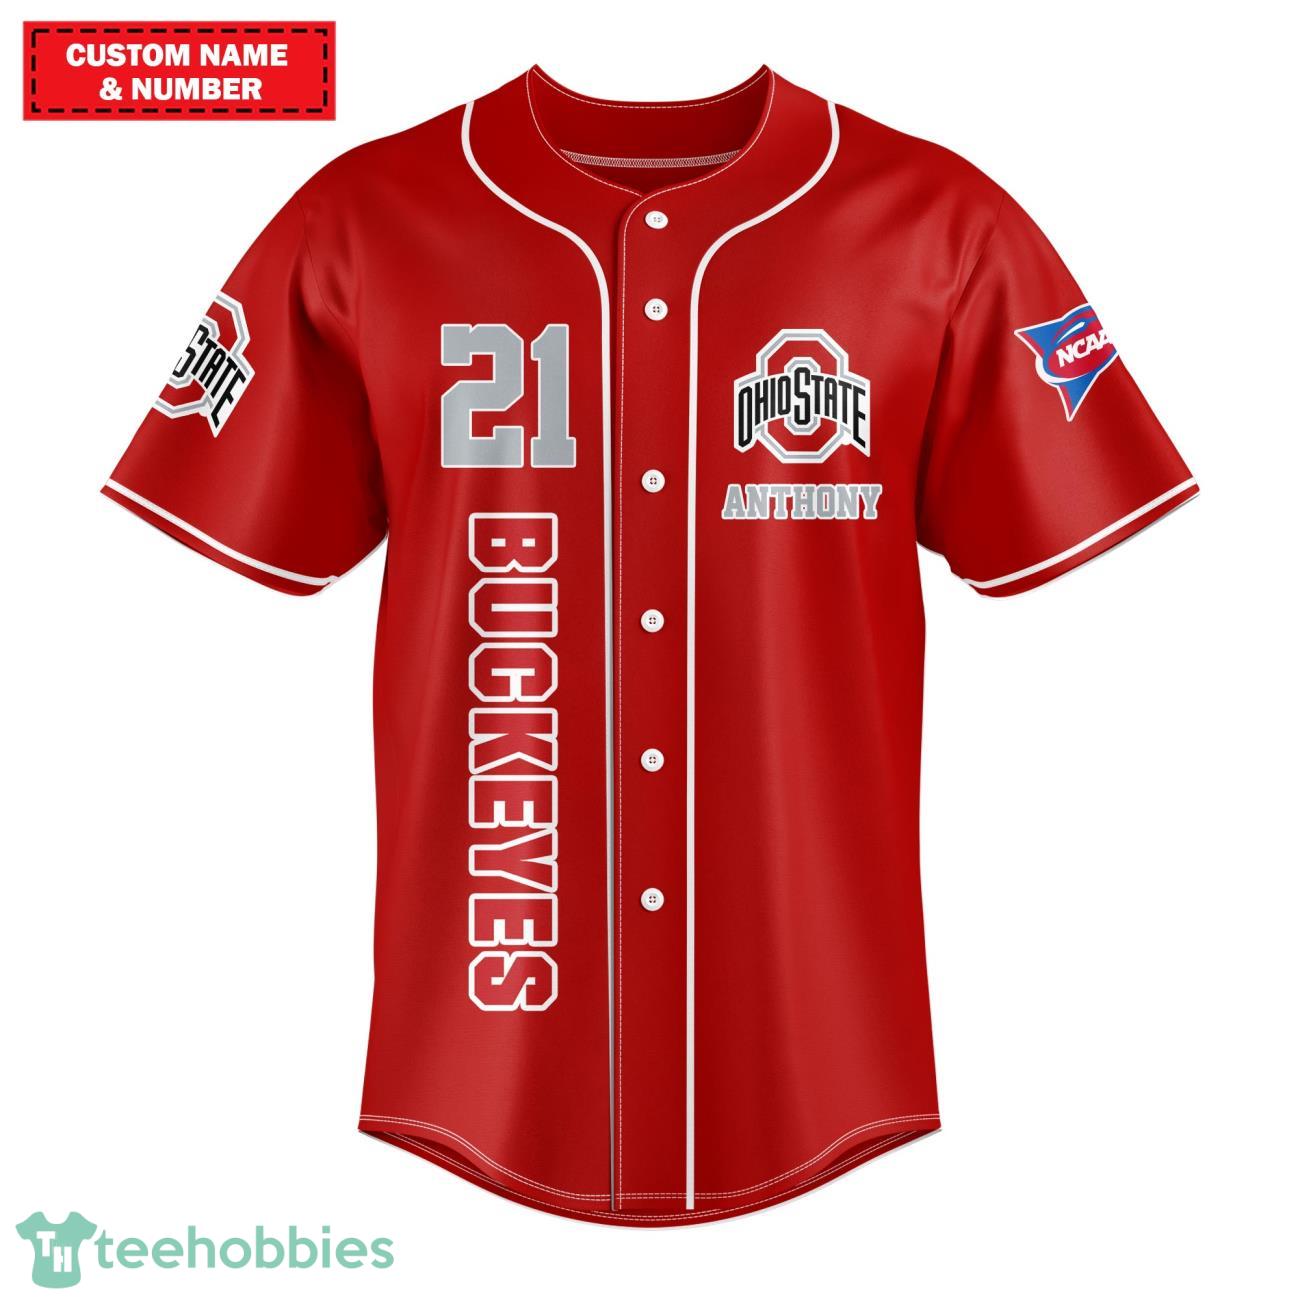 Ohio State Buckeyes Baseball Jersey NCAA Custom Name & Number Product Photo 2